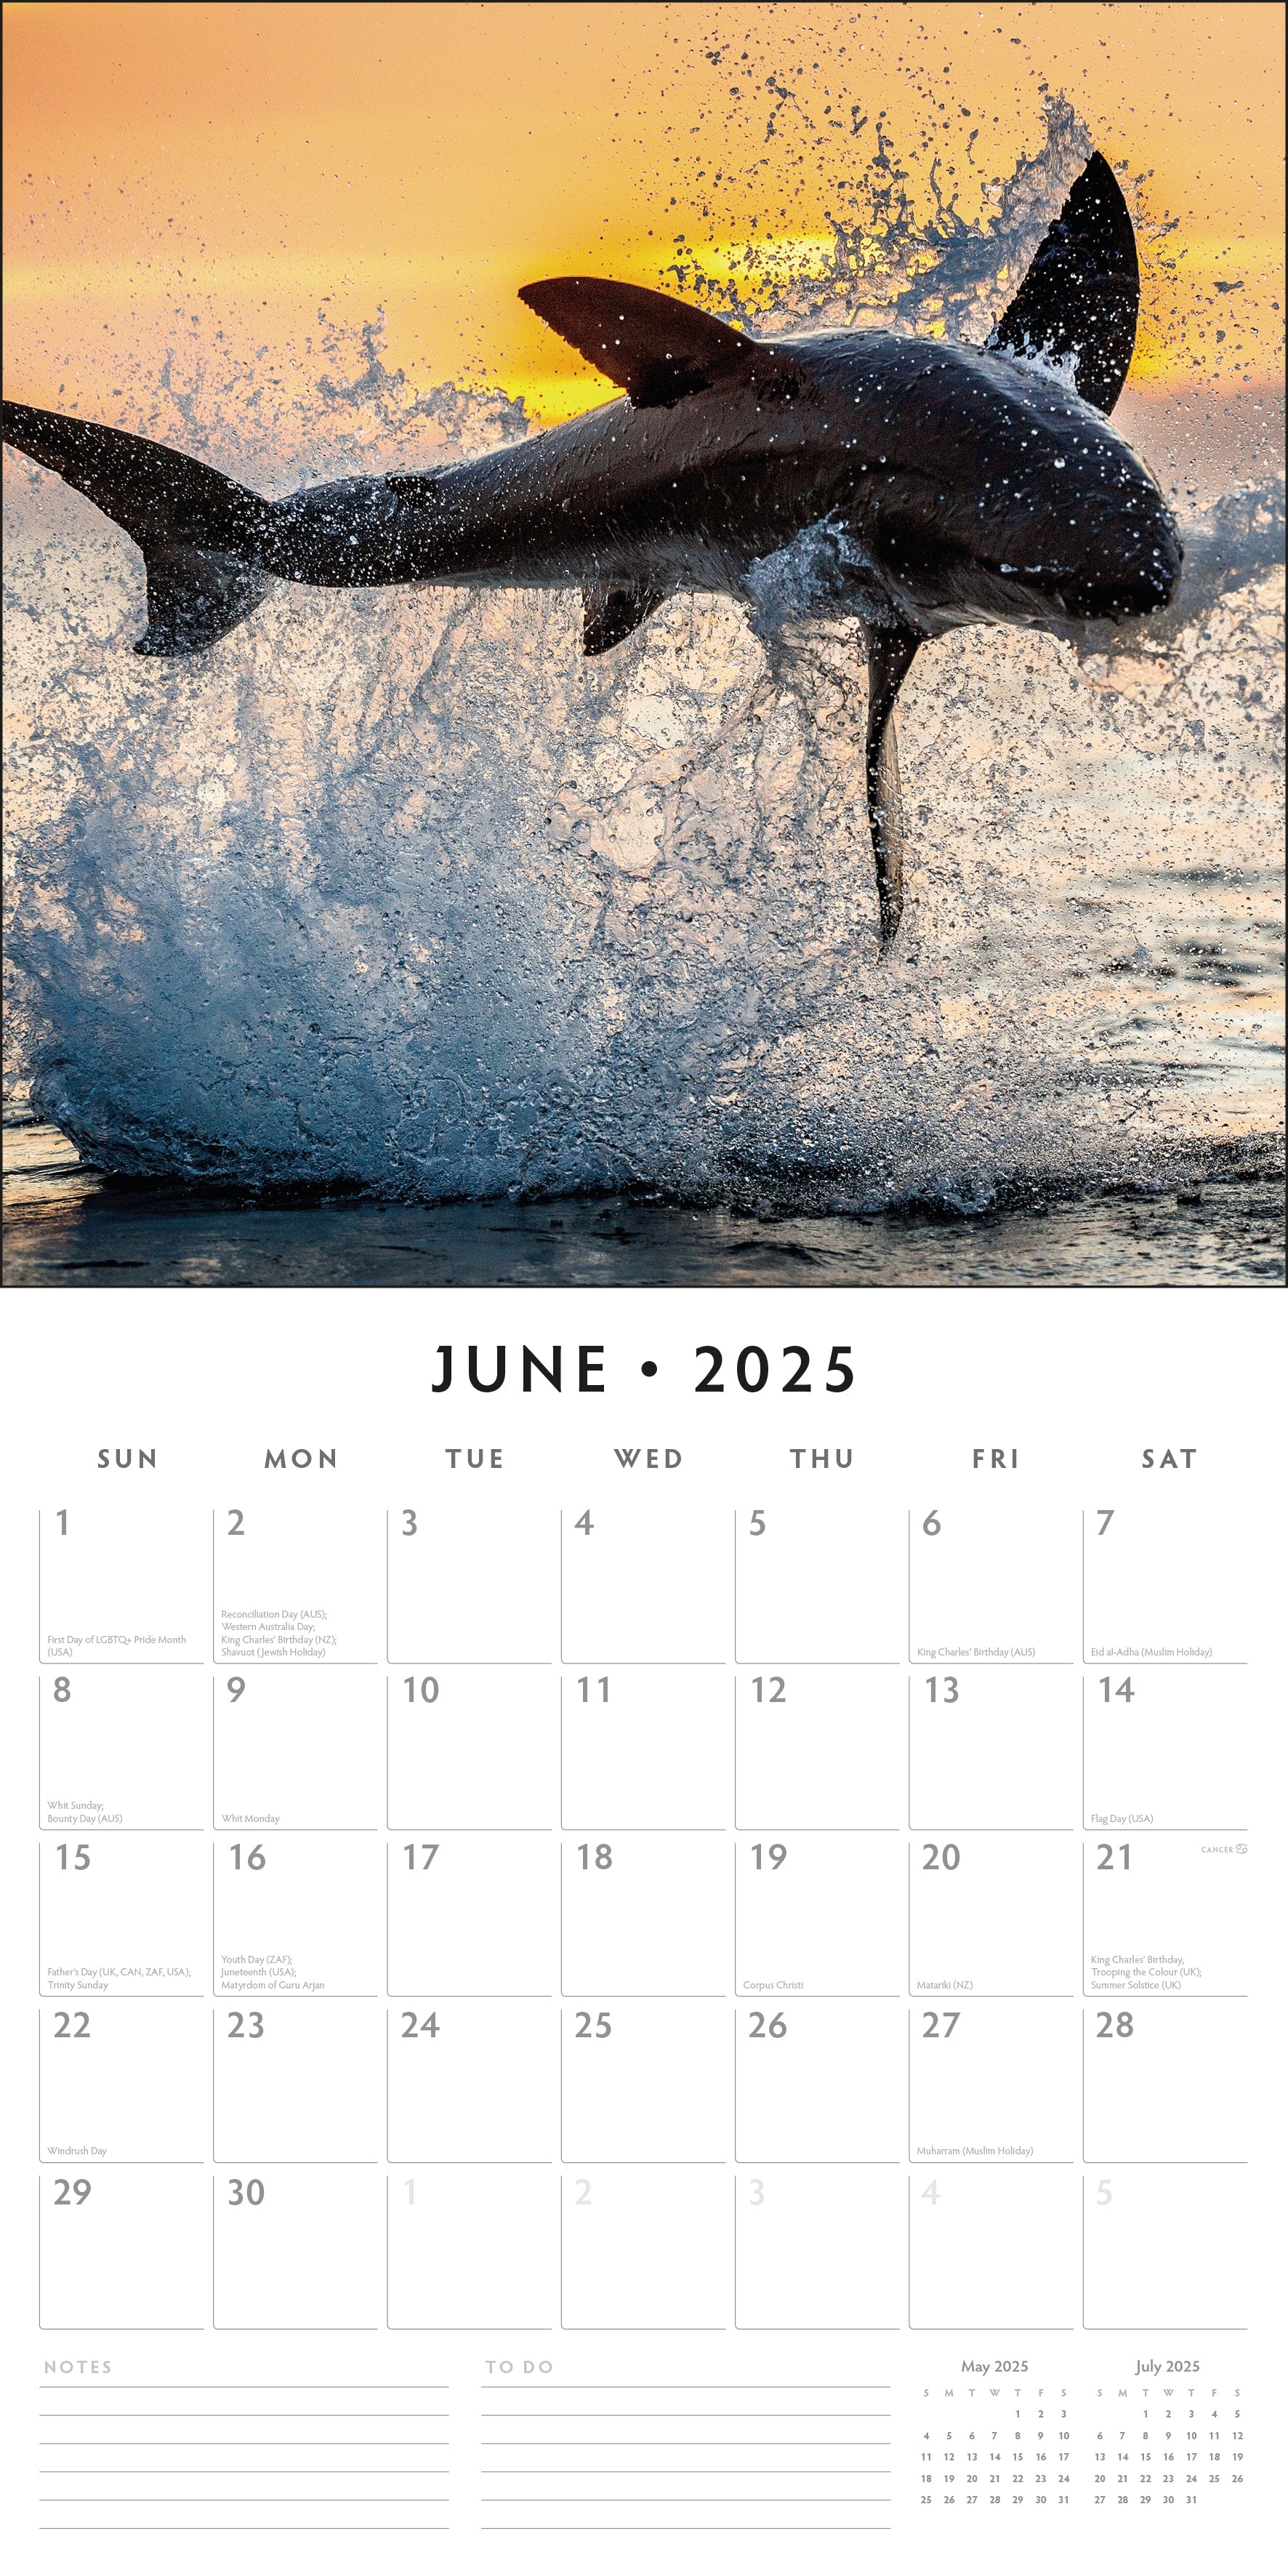 2025 Sharks - Square Wall Calendar